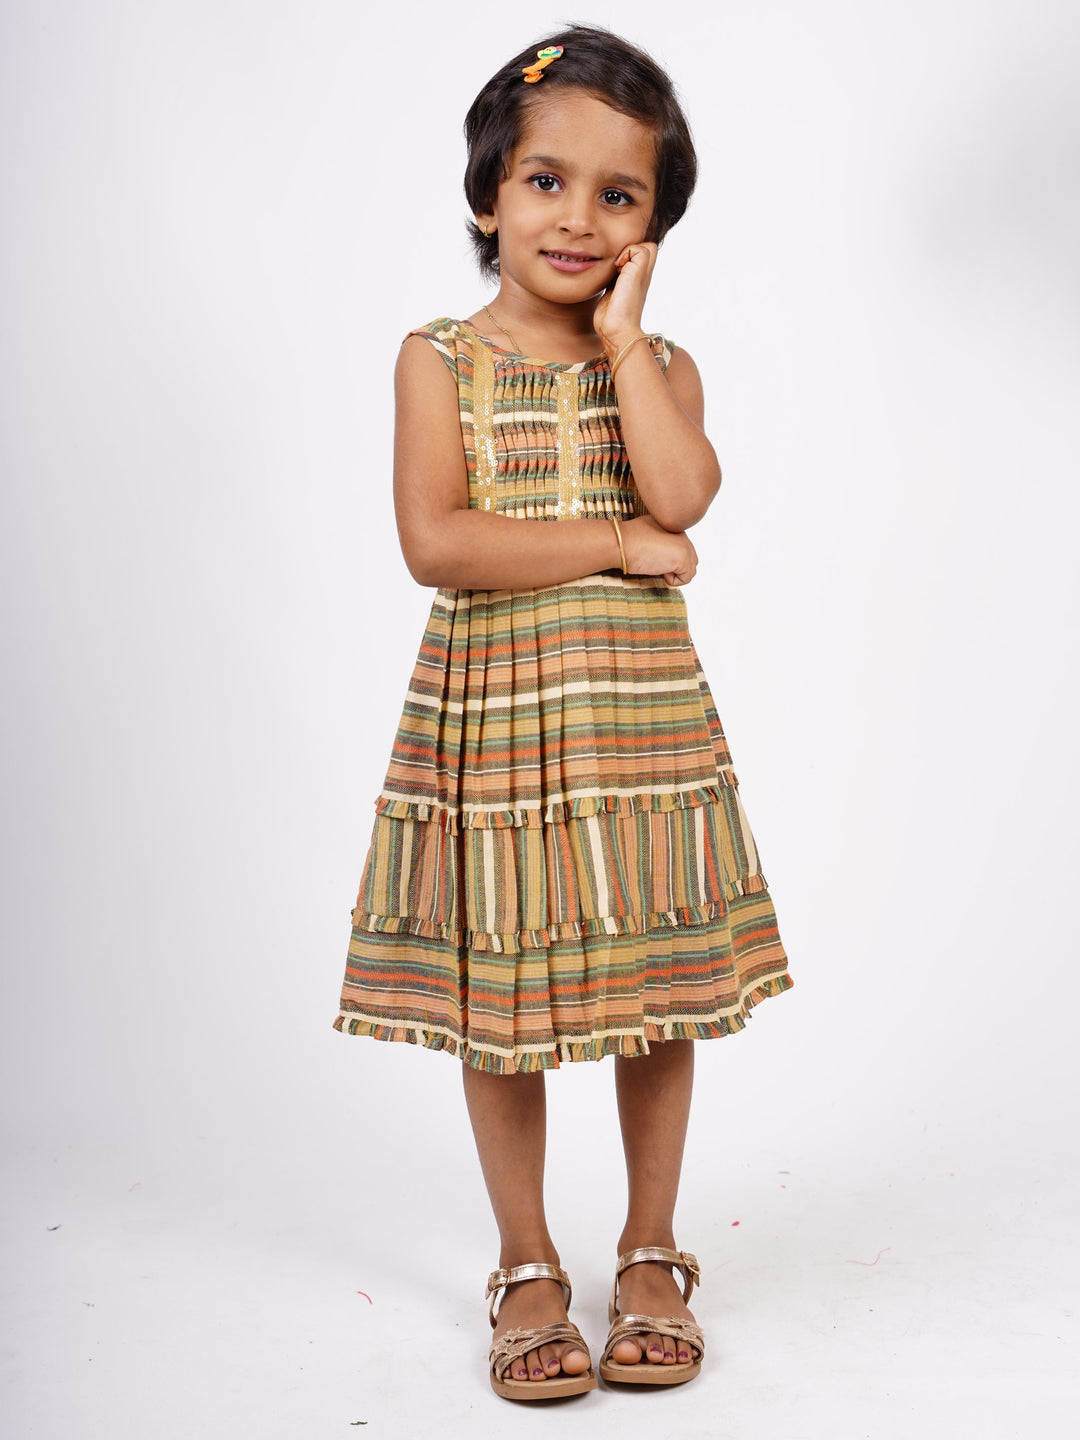 The Nesavu Frocks & Dresses Soft Cotton Striped Casual Play Wear For Baby Girls psr silks Nesavu 16 (1Y ) / Peru GFC741